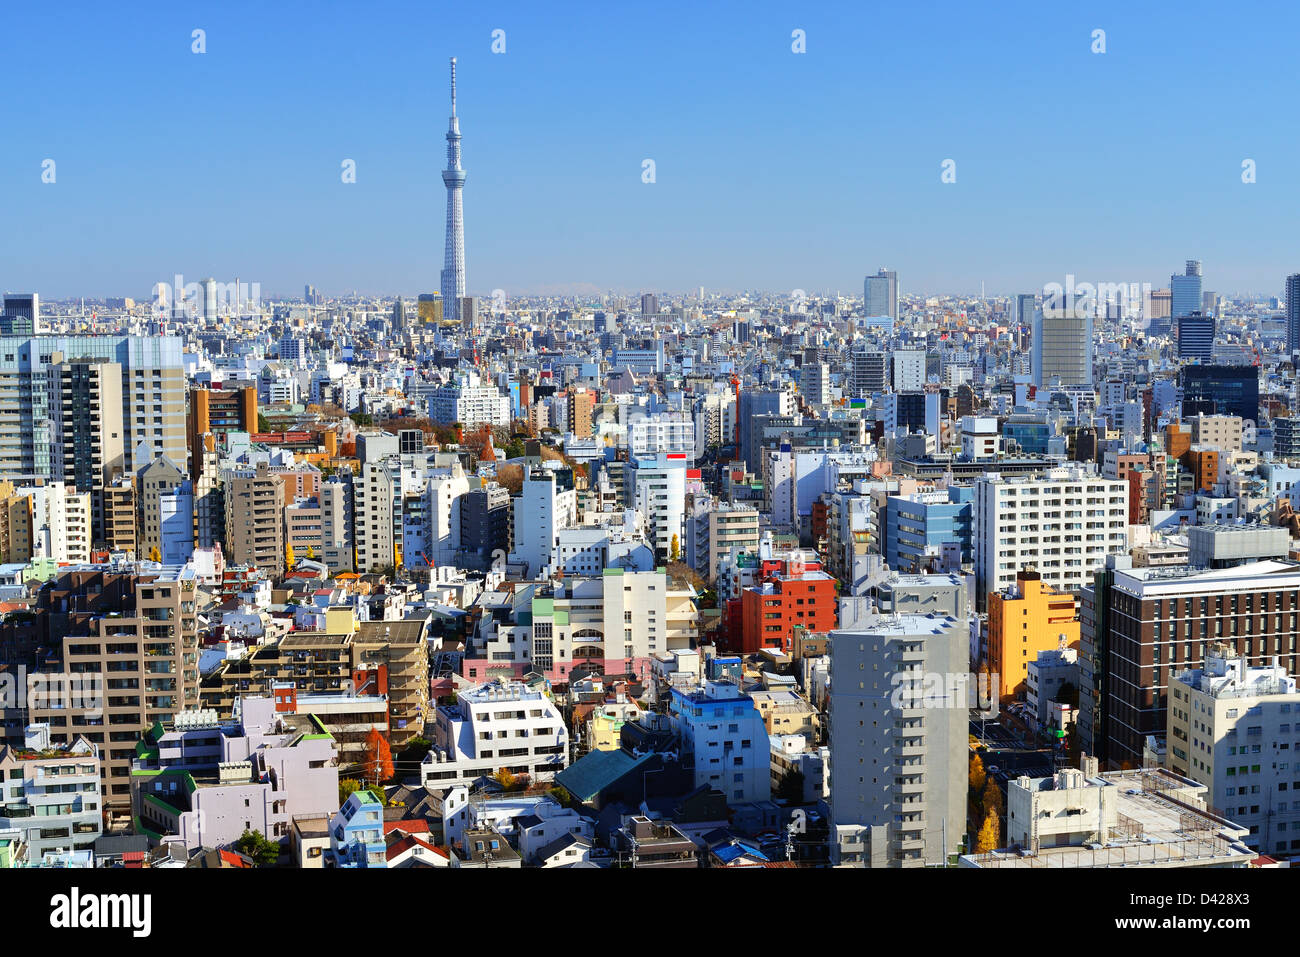 The Tokyo Sky Tree towers above the dense skyline of Tokyo, Japan. Stock Photo